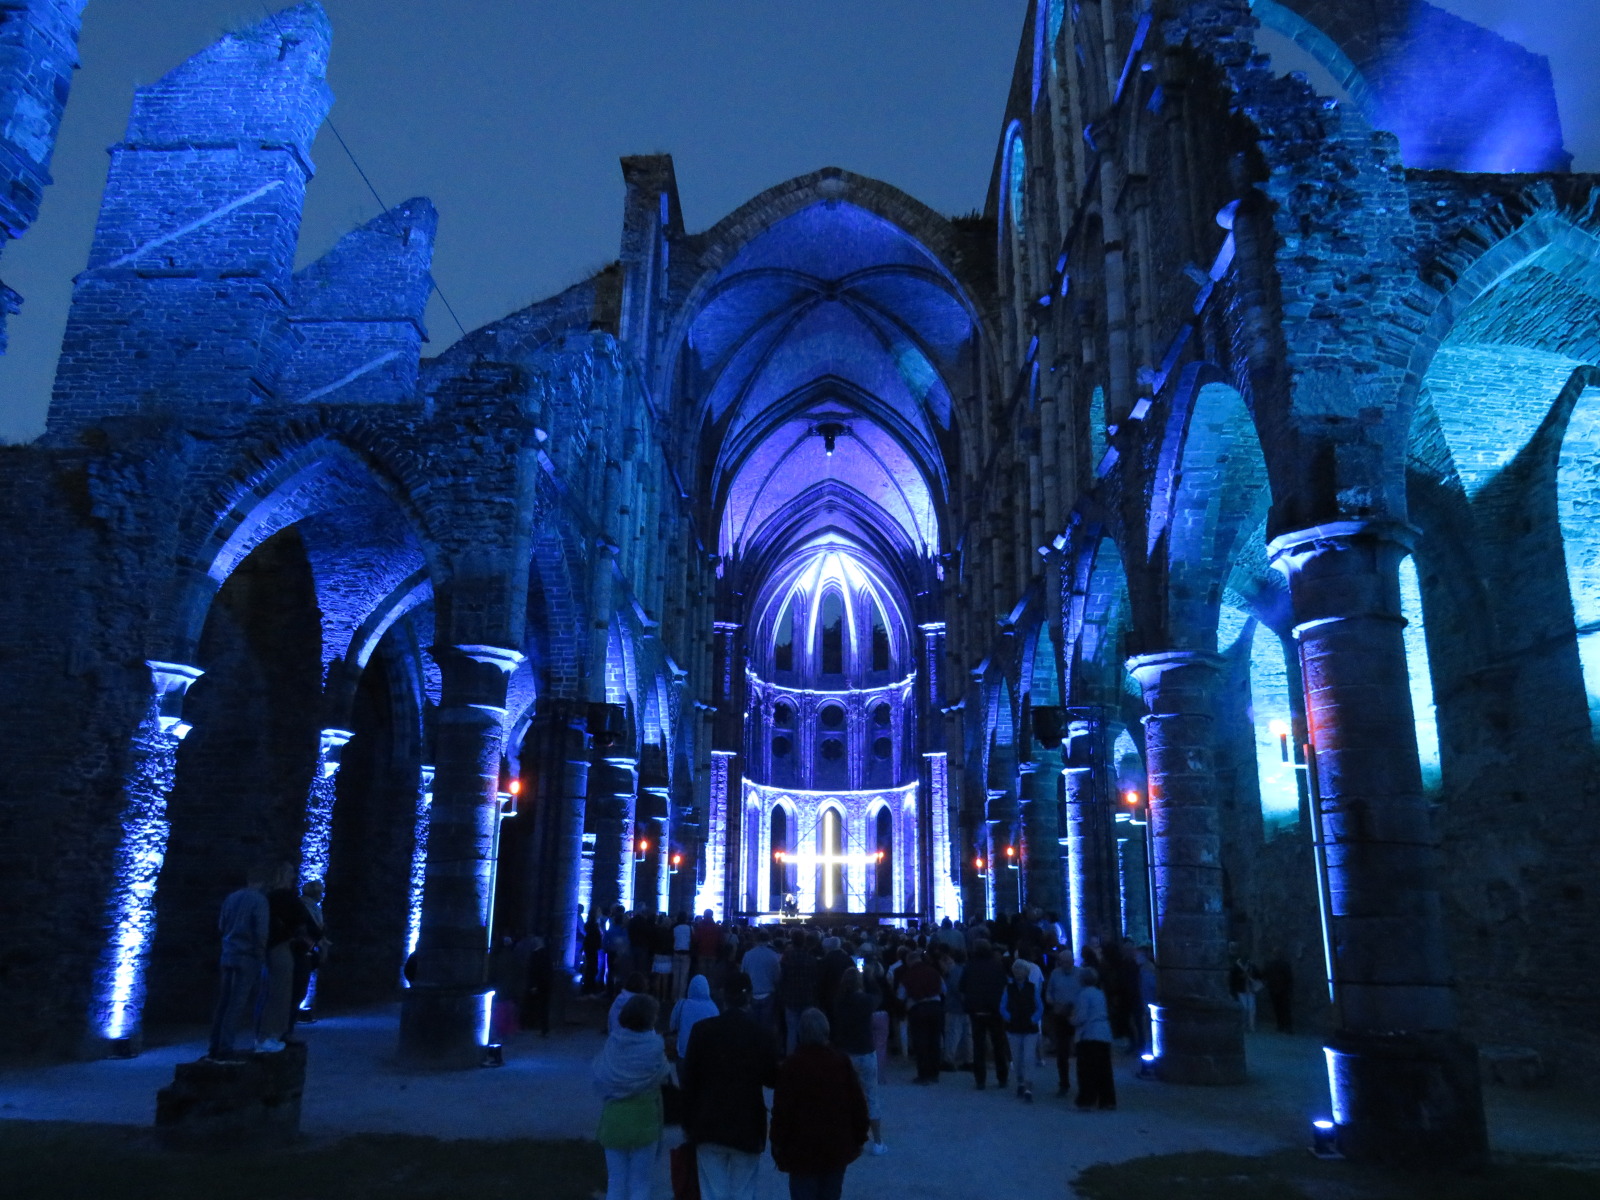 Night shows at Villers-la-Ville abbey